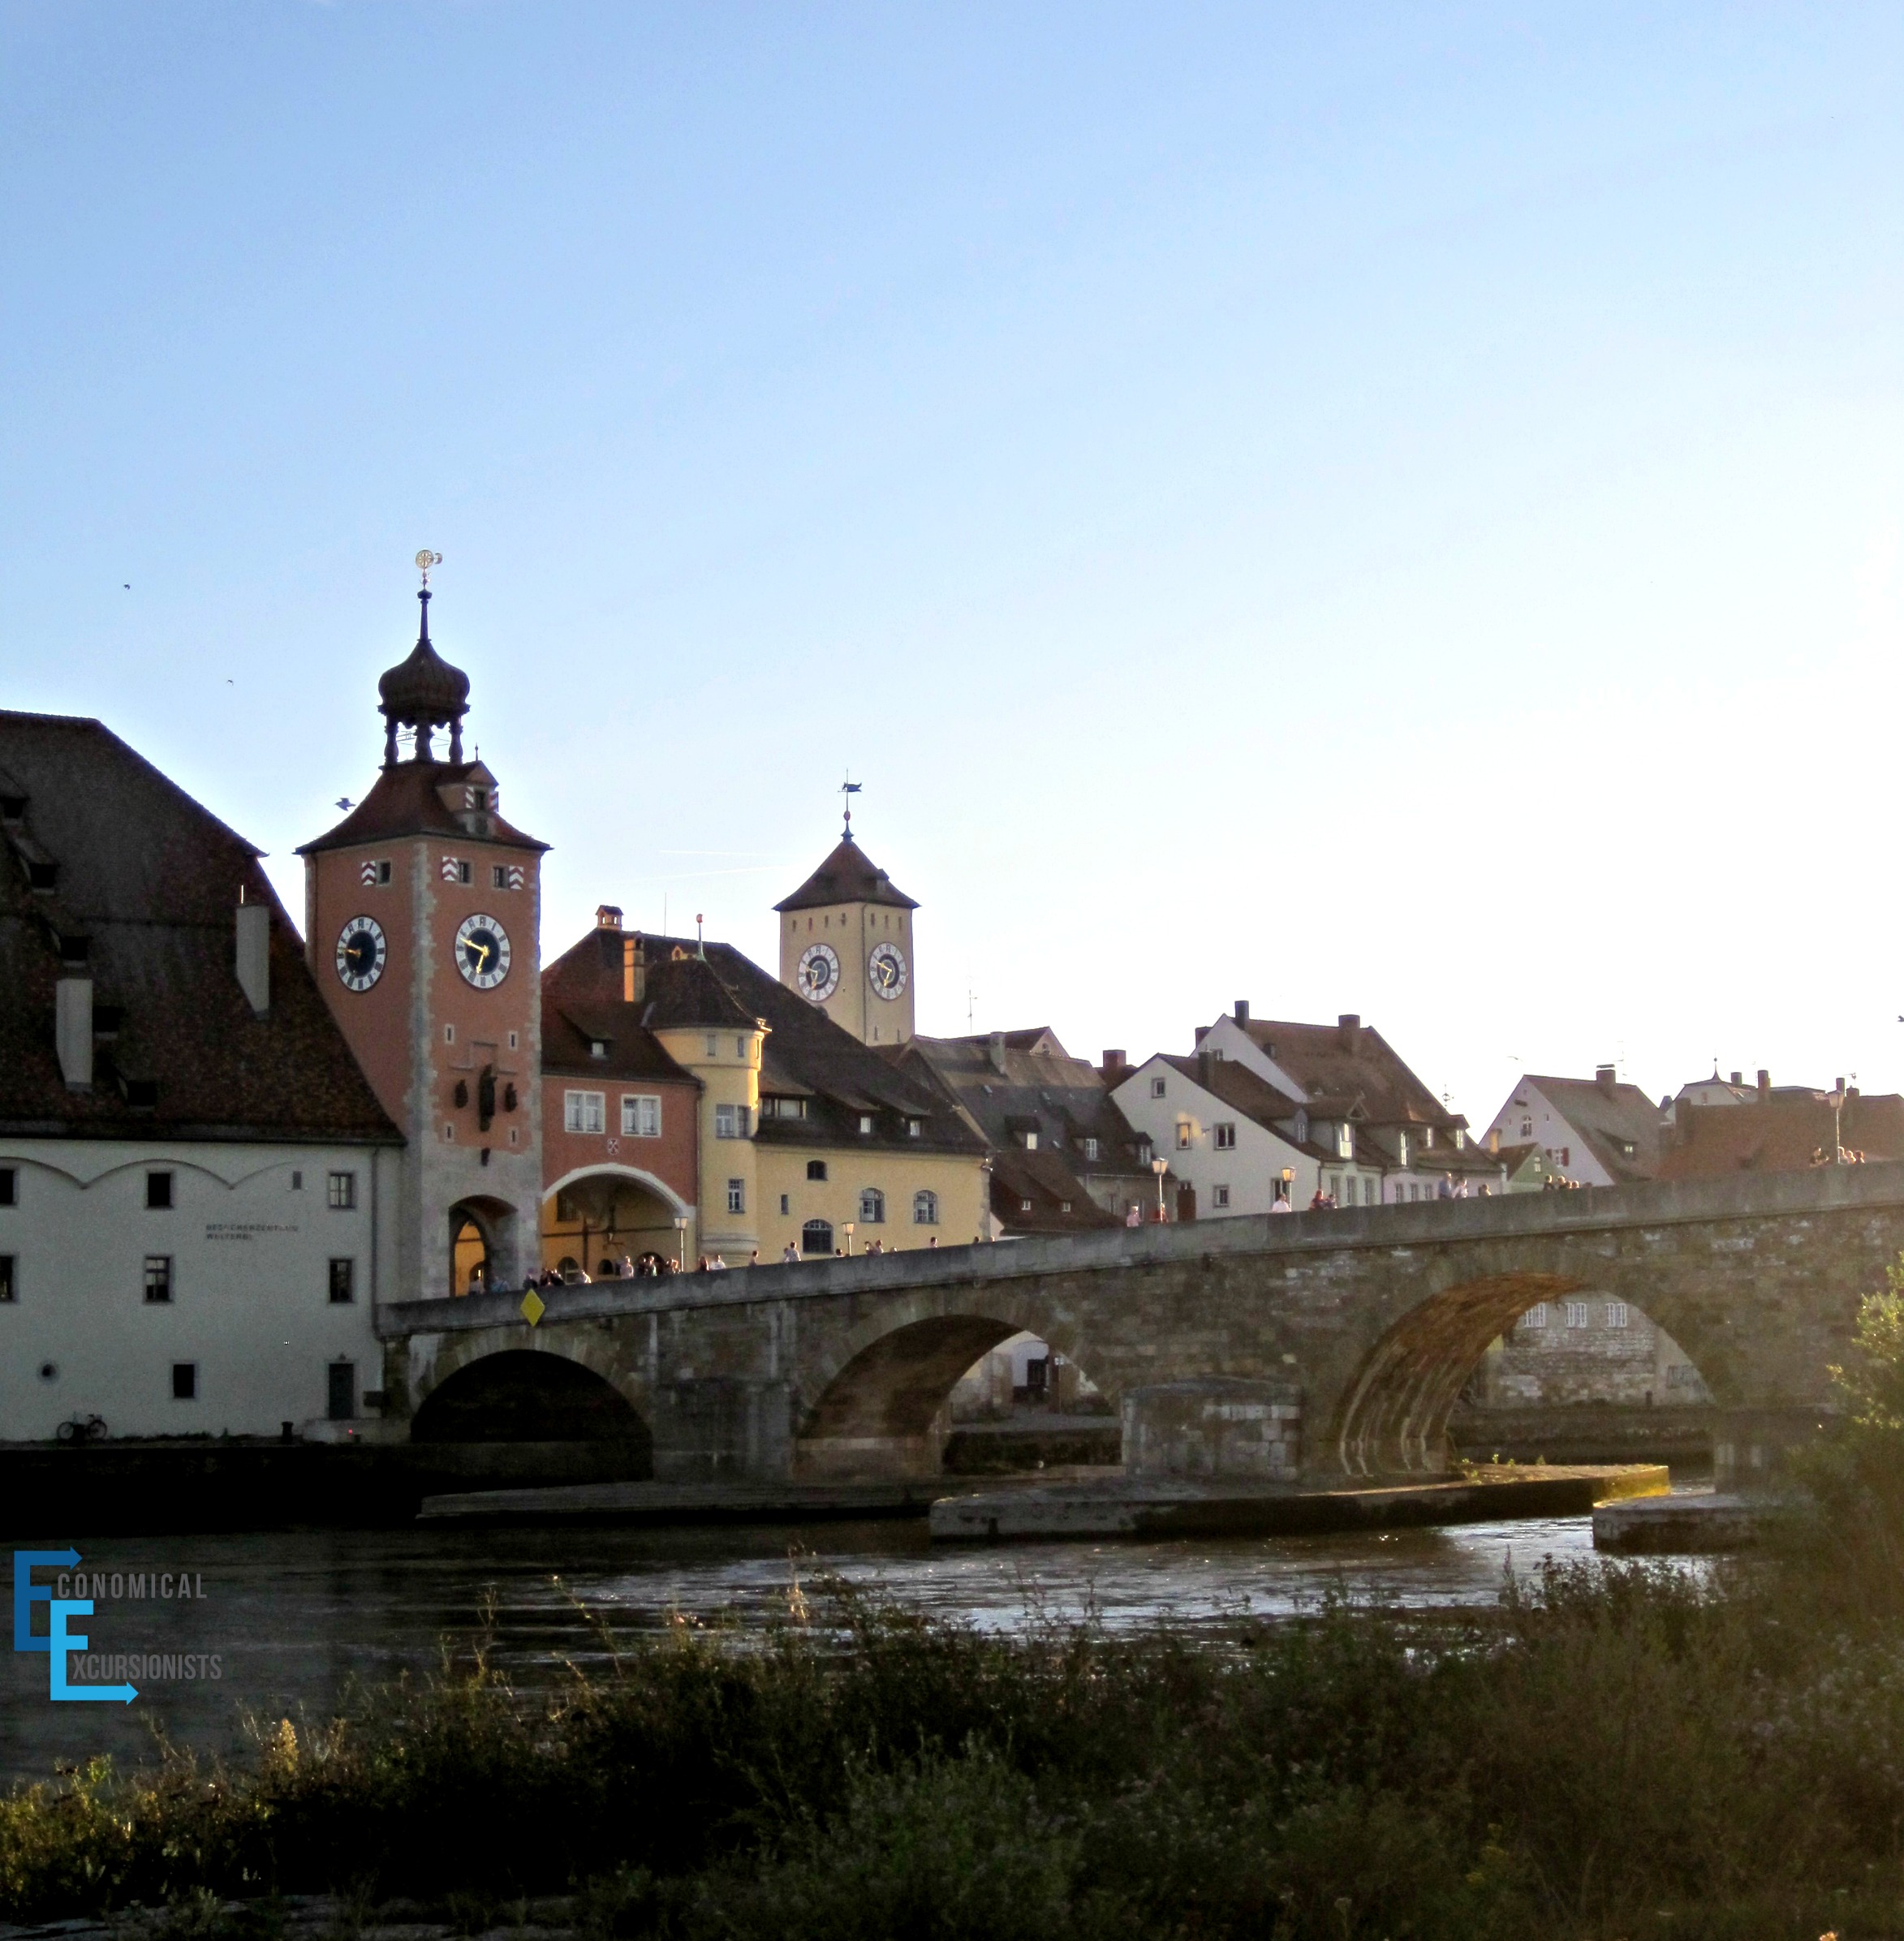 Regensburg Stone Bridge and Donau River